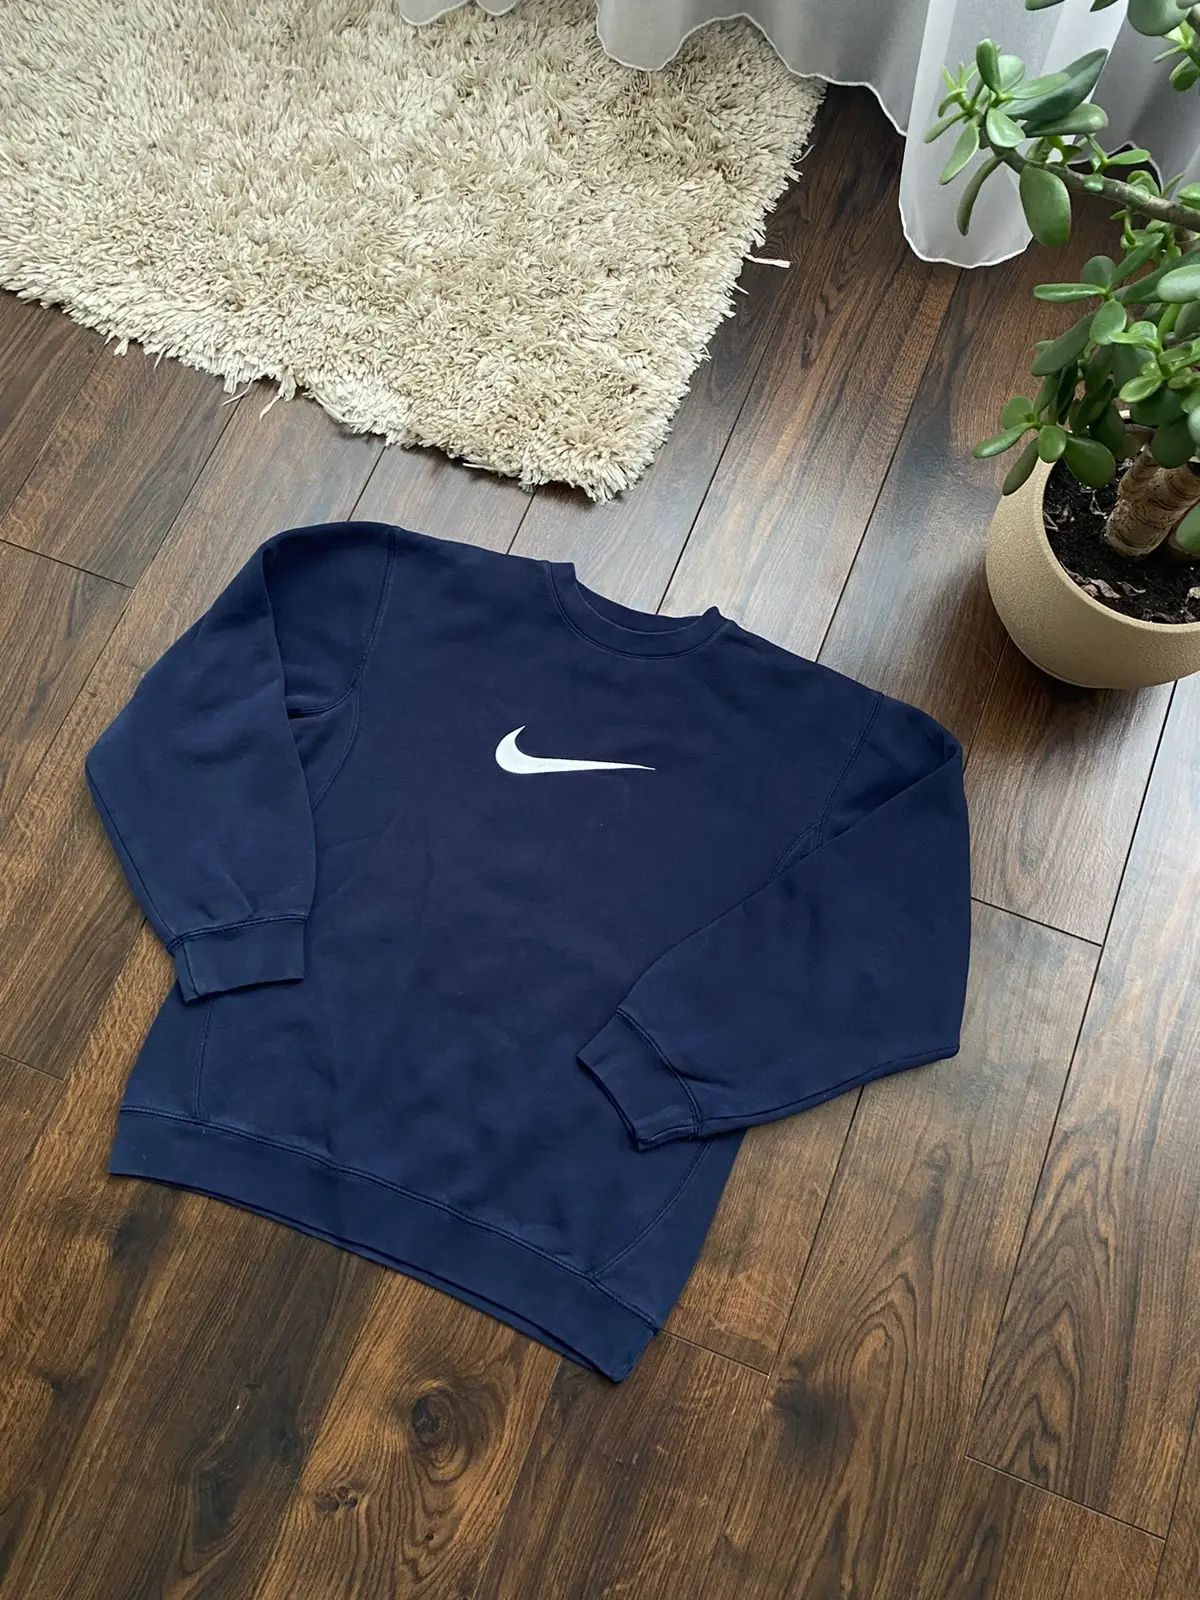 Nike Vintage Nike sweatshirt center swoosh | Grailed | Grailed